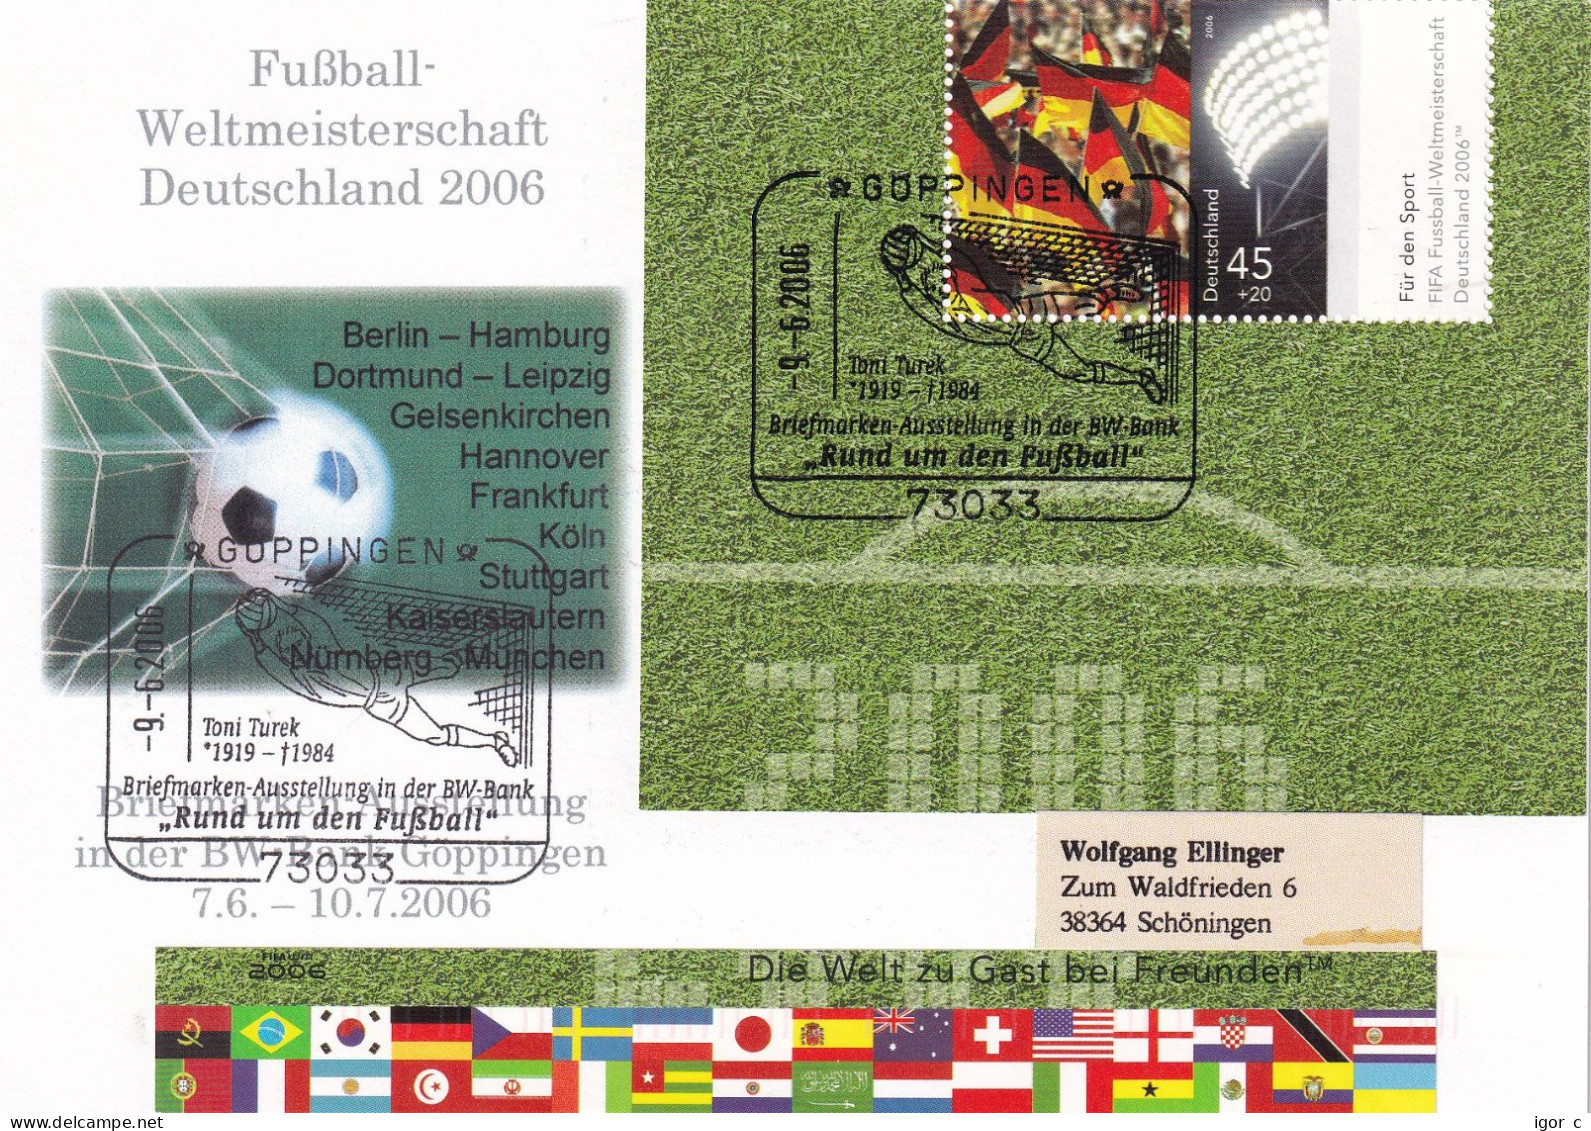 Germany 2006 Card; Football Fussball Soccer Calcio; FIFA World Cup 1954 2006; Toni Turek; Wunder Von Bern; Flags: Host - 1954 – Schweiz